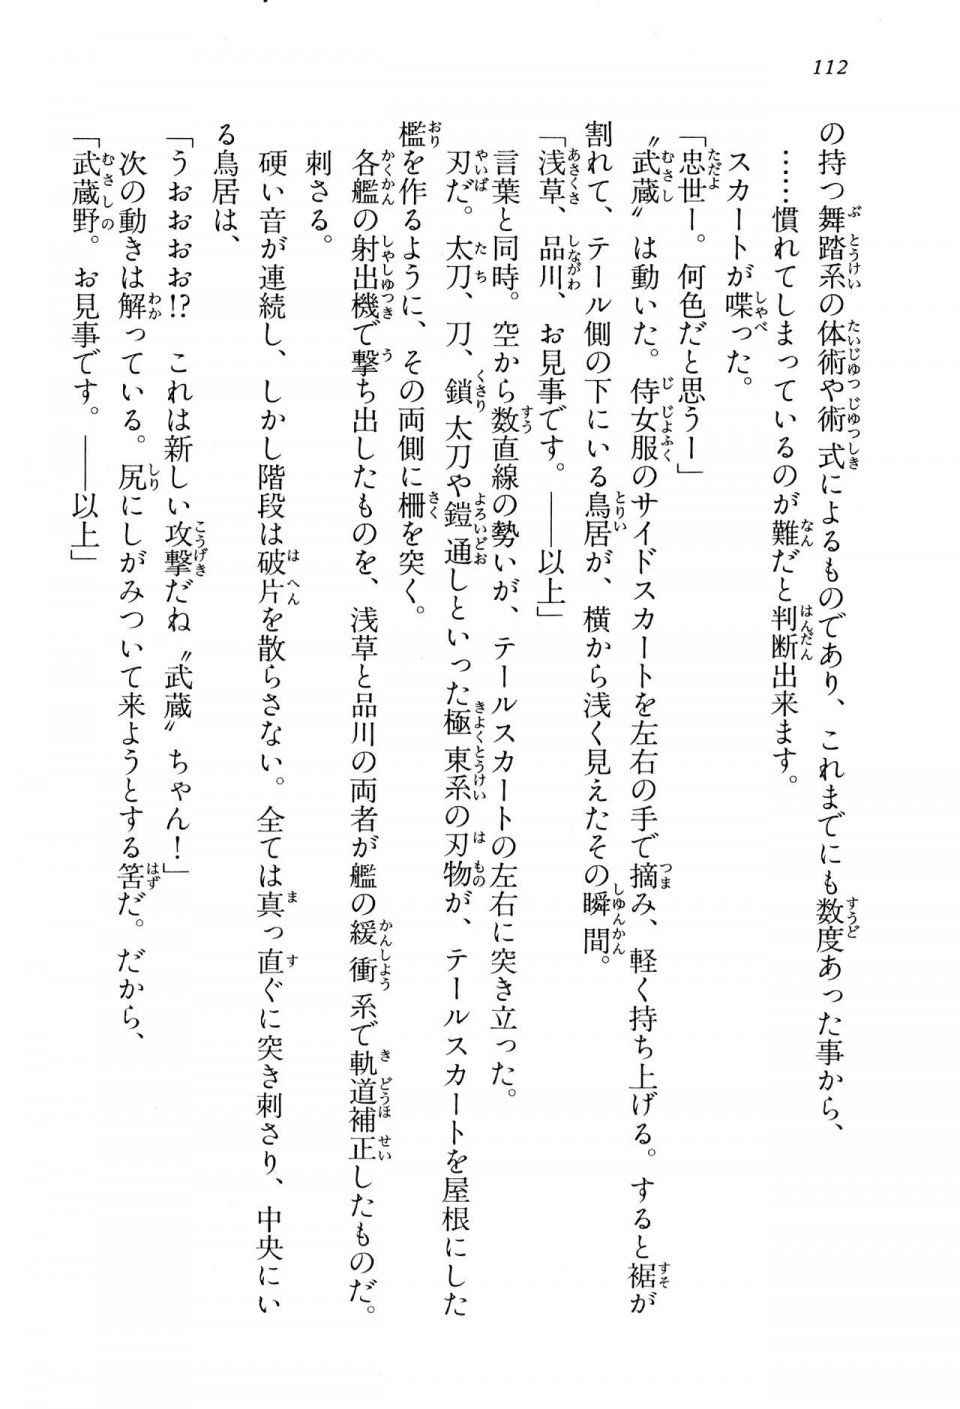 Kyoukai Senjou no Horizon BD Special Mininovel Vol 3(2A) - Photo #116